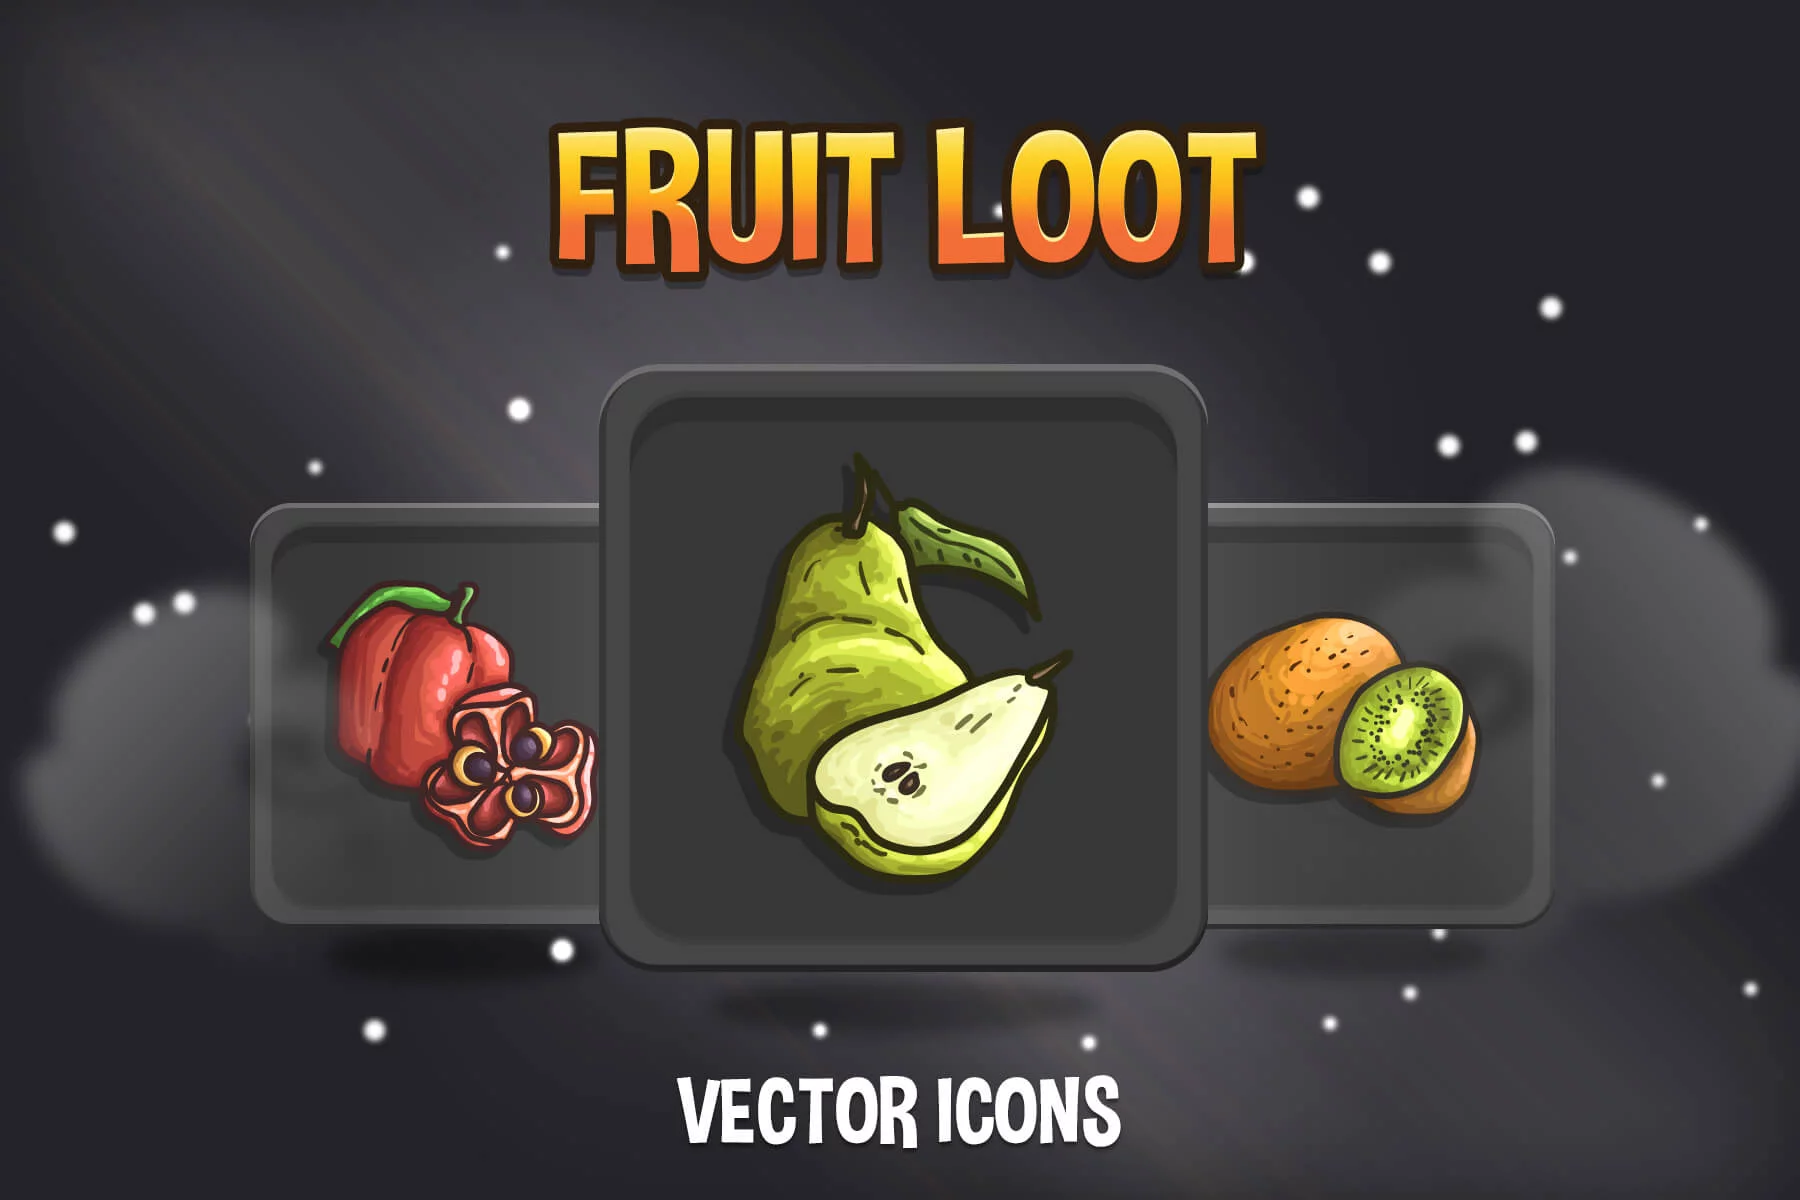 Fruit Battlegrounds SIMPLE AUTO FARM –